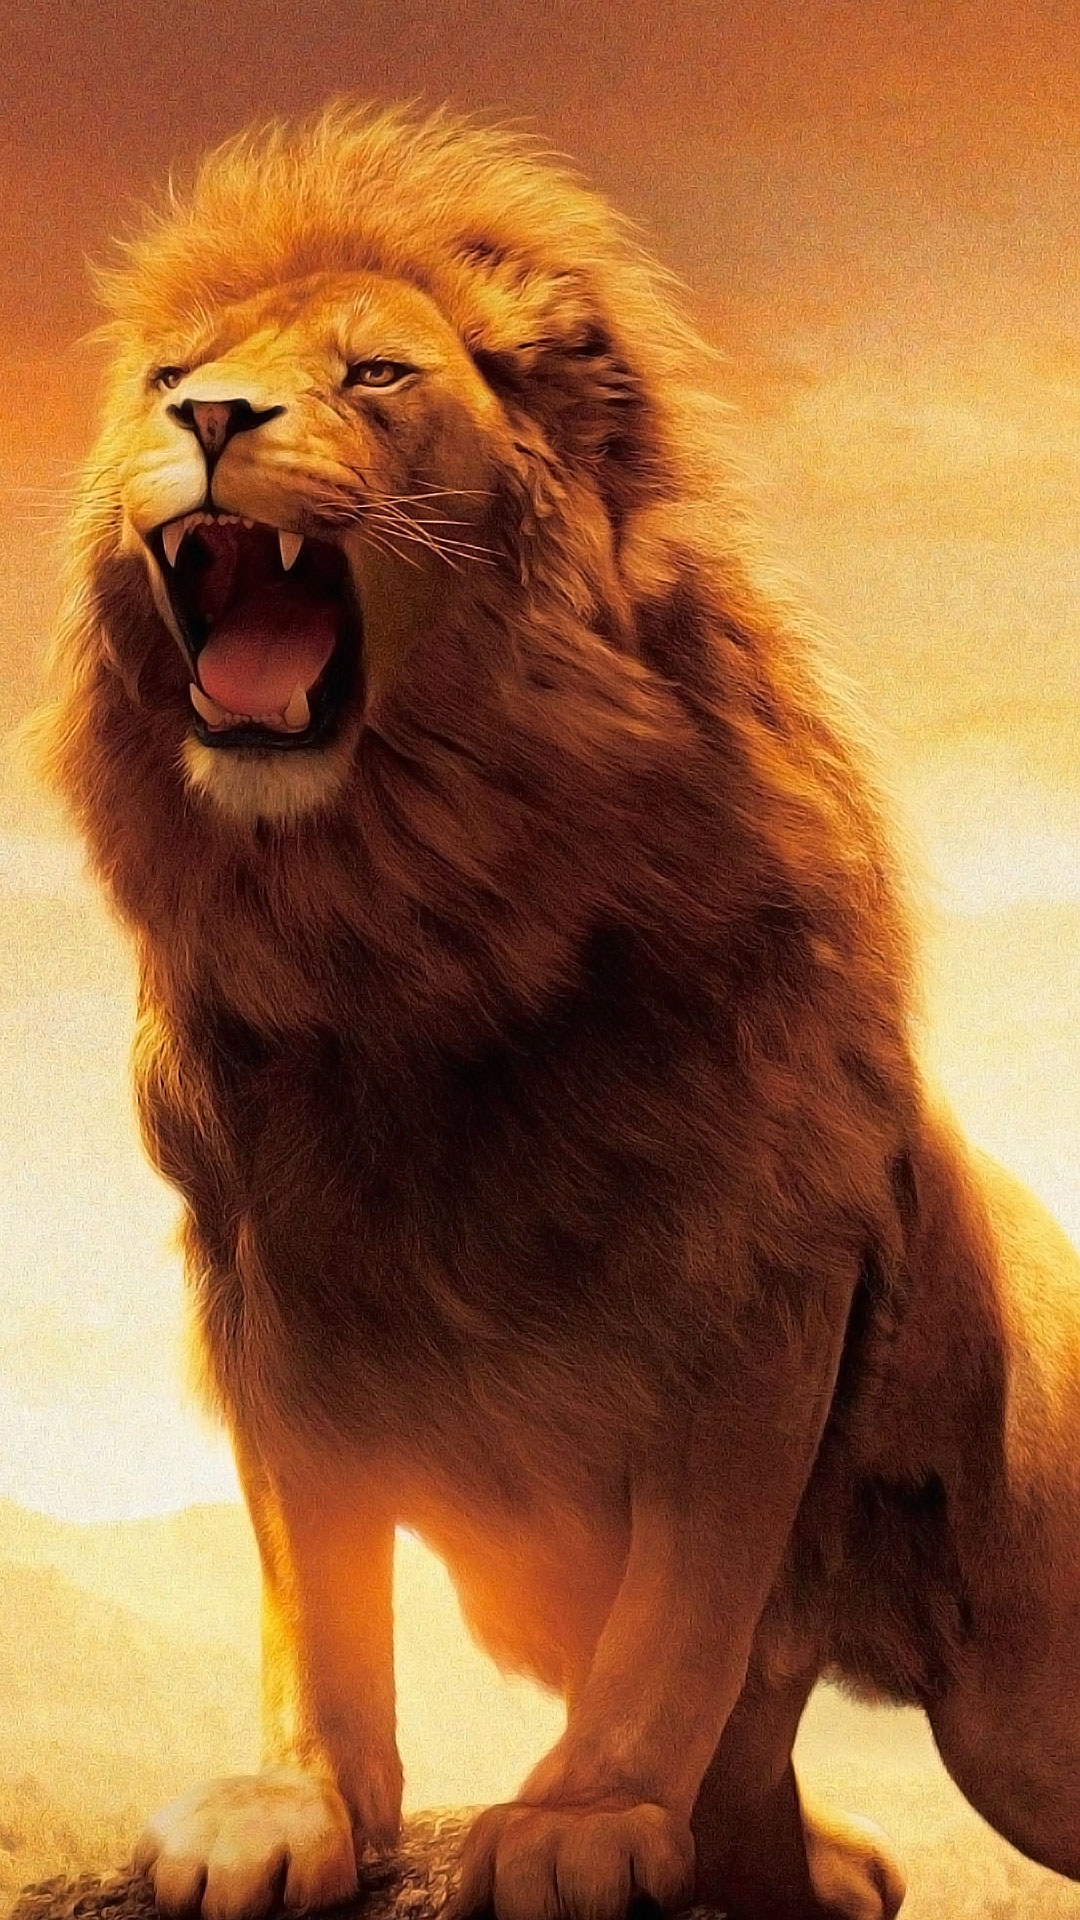 A lion's roar [1080x1920]. Lion wallpaper, Lion HD wallpaper